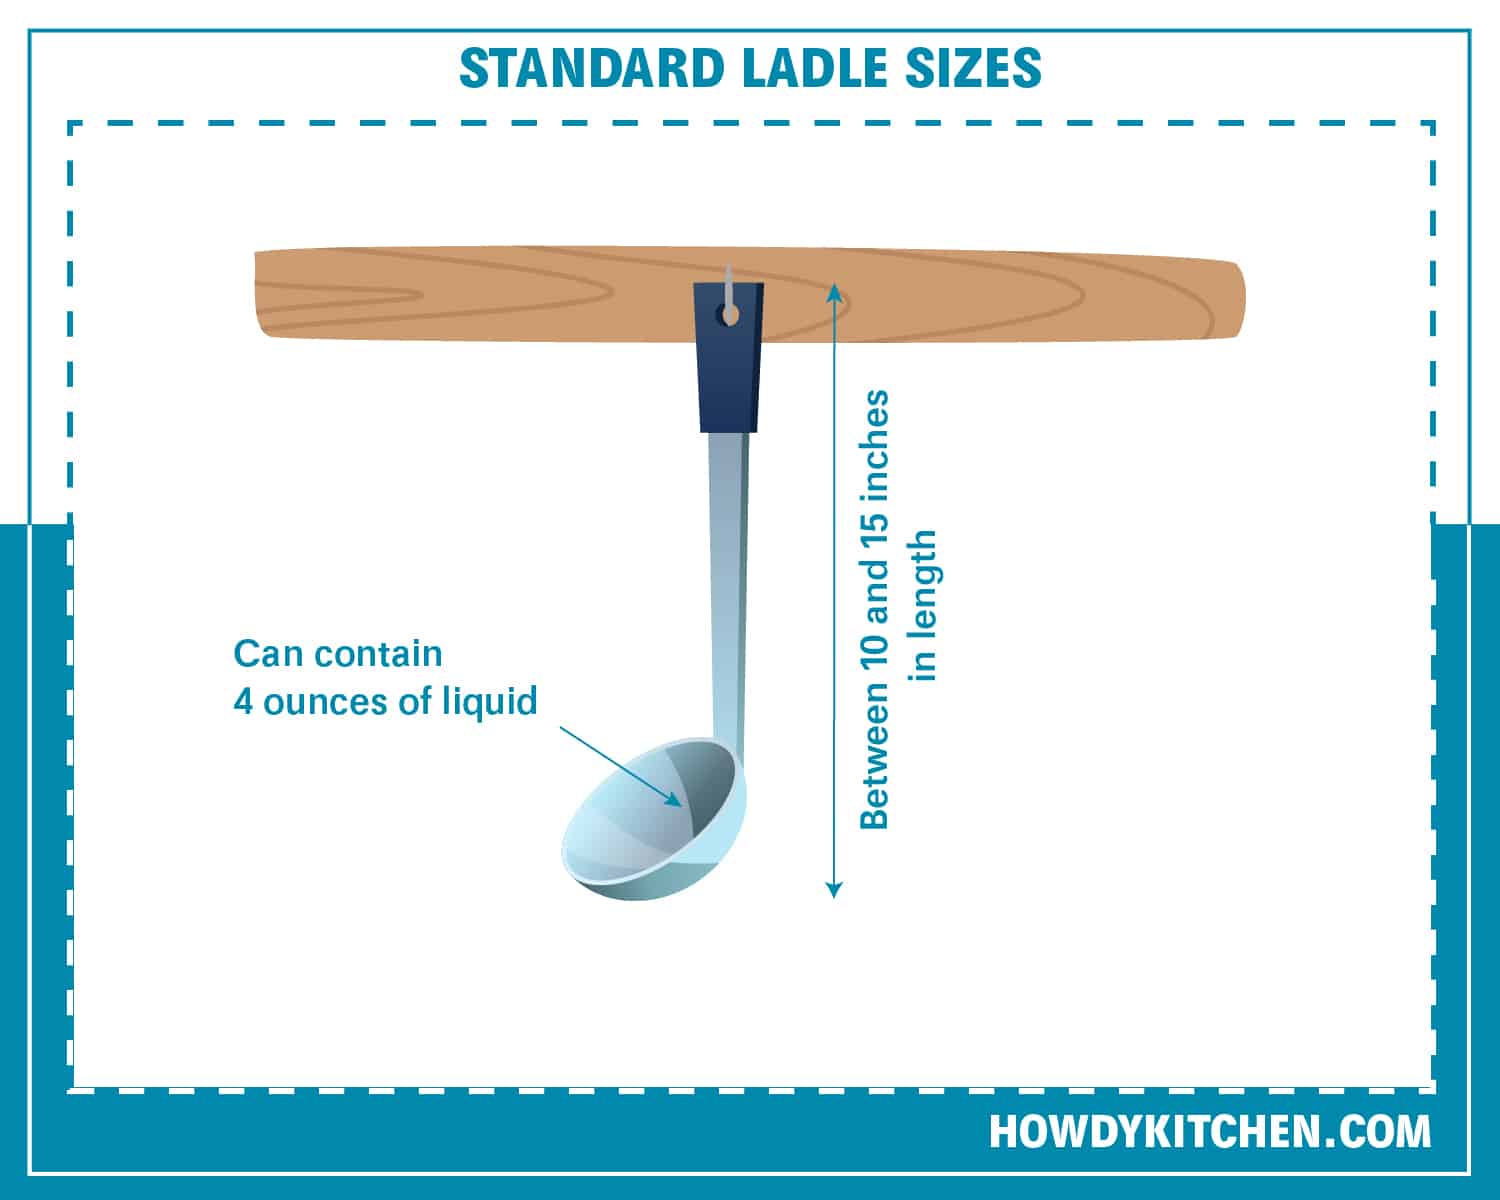 Standard Ladle Sizes